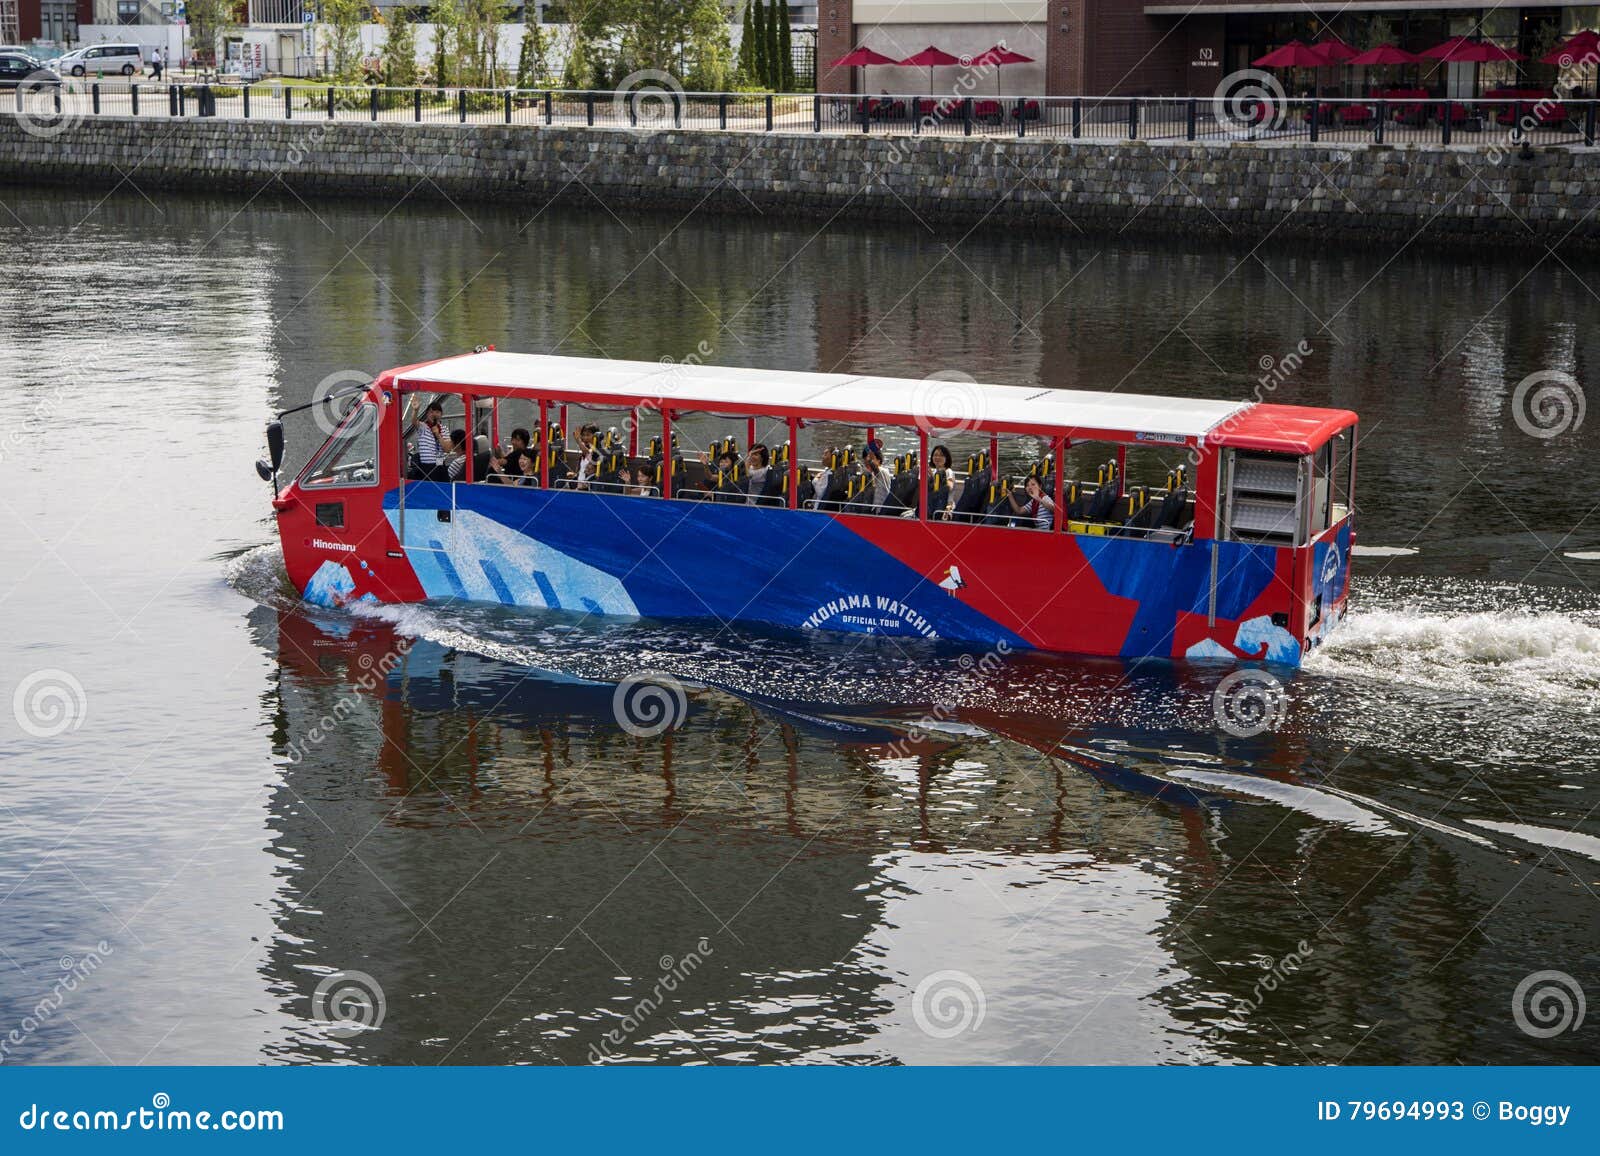 amphibious bus tour in yokohama, japan editorial stock